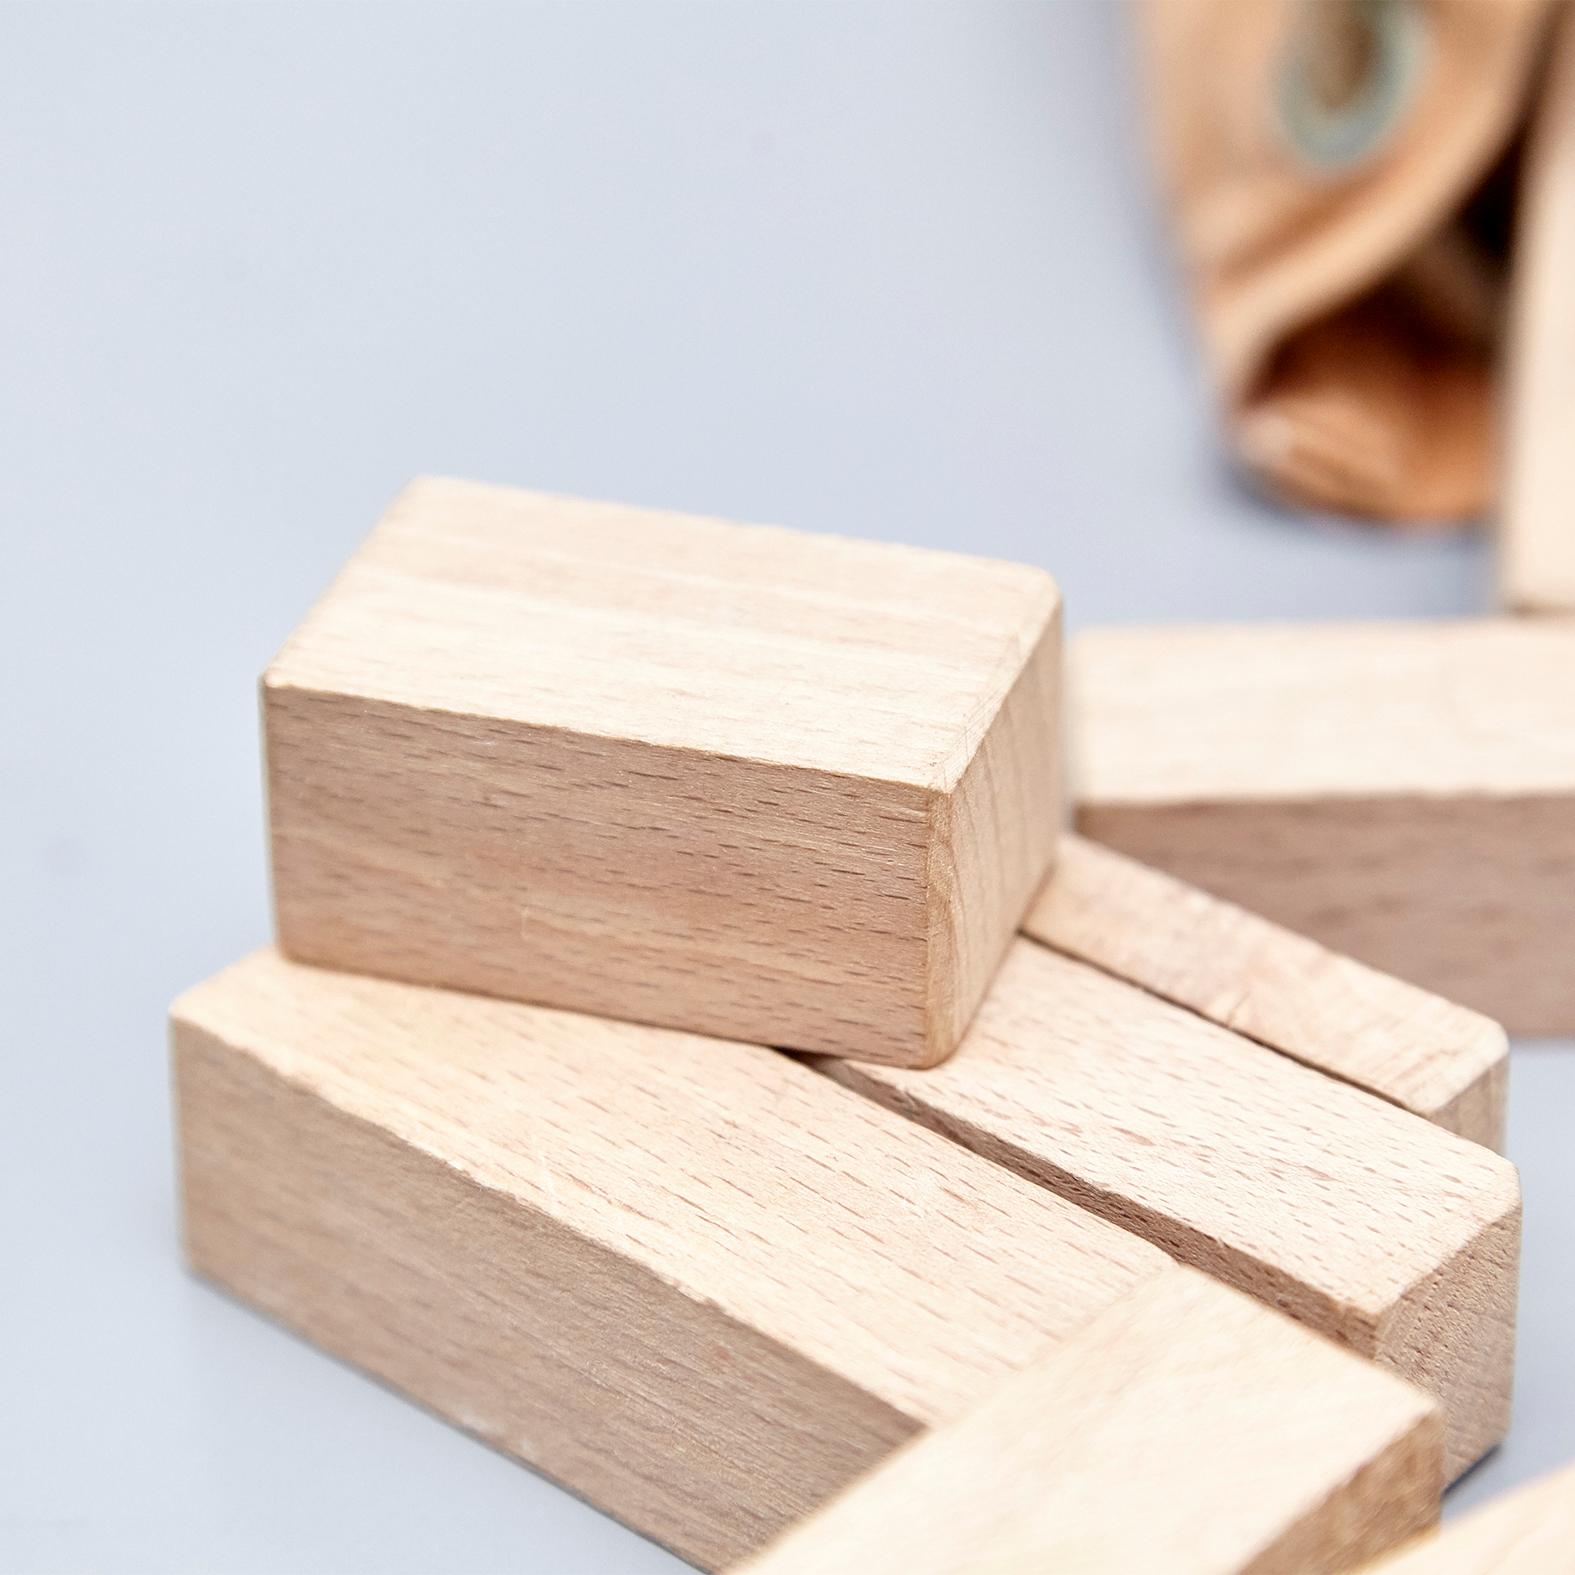 Ko Verzuu for Ado, Mid-Century Modern, Wood Blocks Construction Netherlands Toy 3